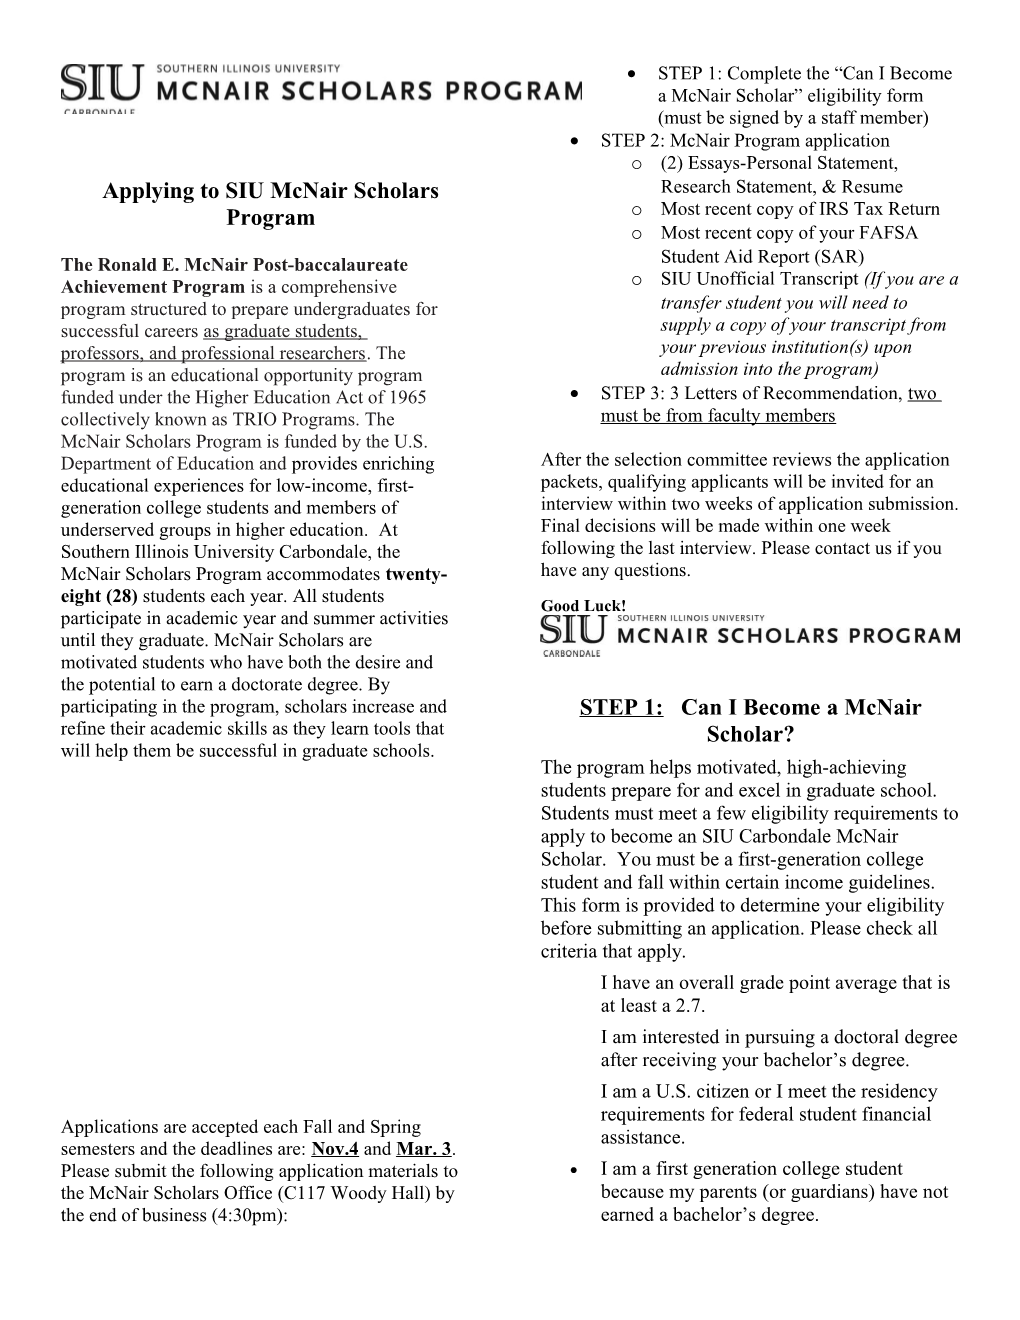 Applying to SIU Mcnair Scholars Program